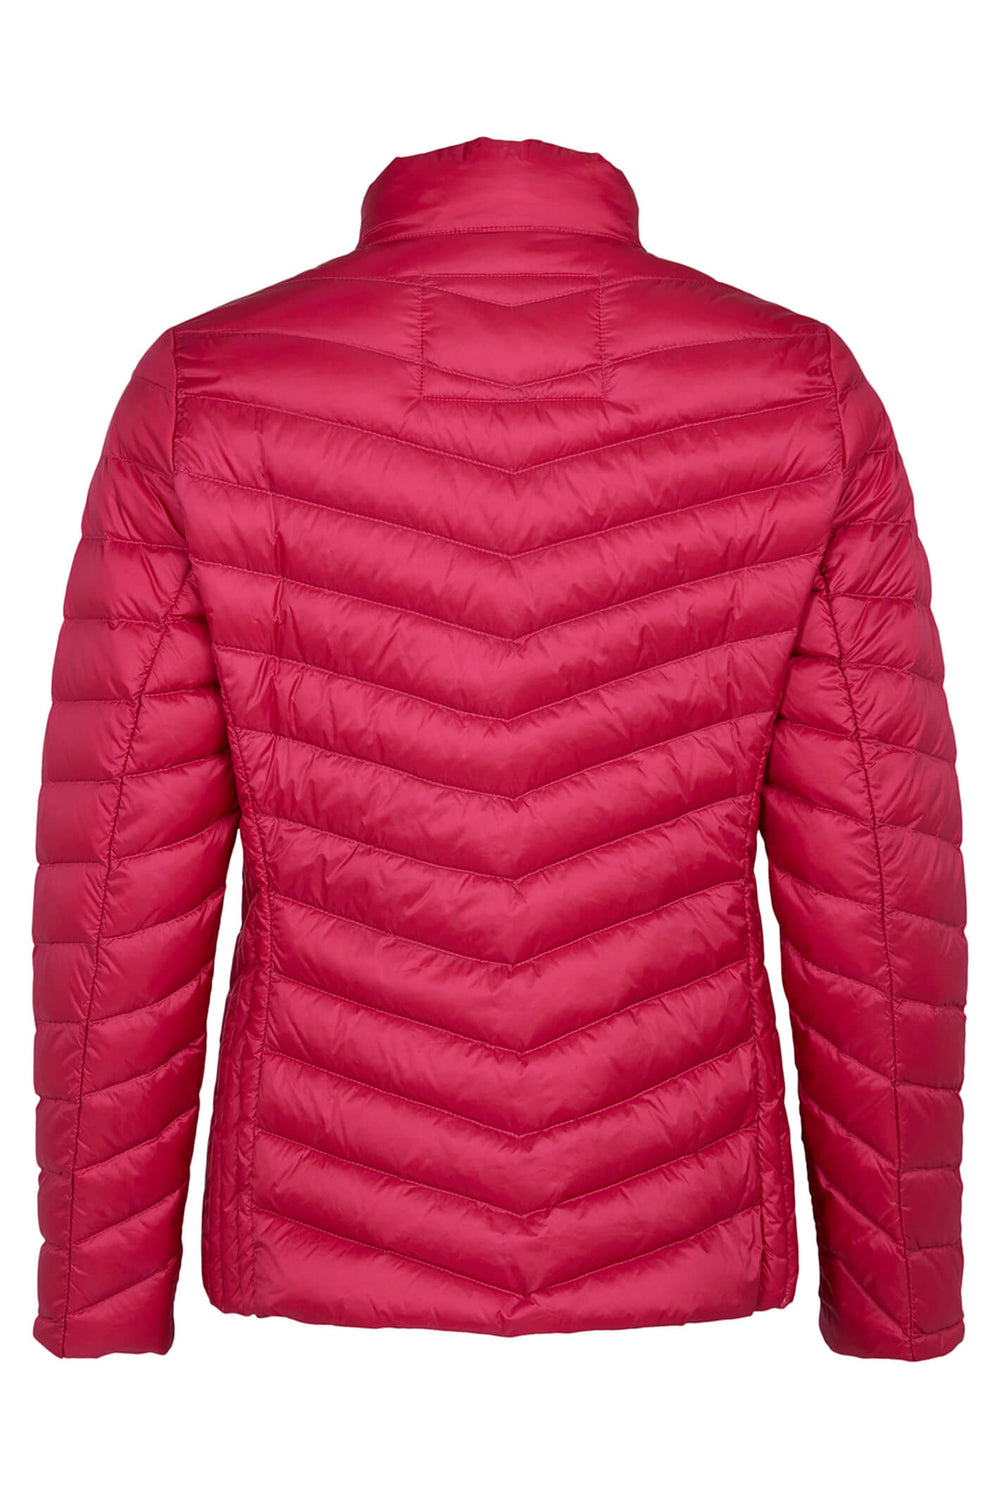 Frandsen 528-588-44 Fuchsia Pink Padded Zip Front Jacket - Dotique